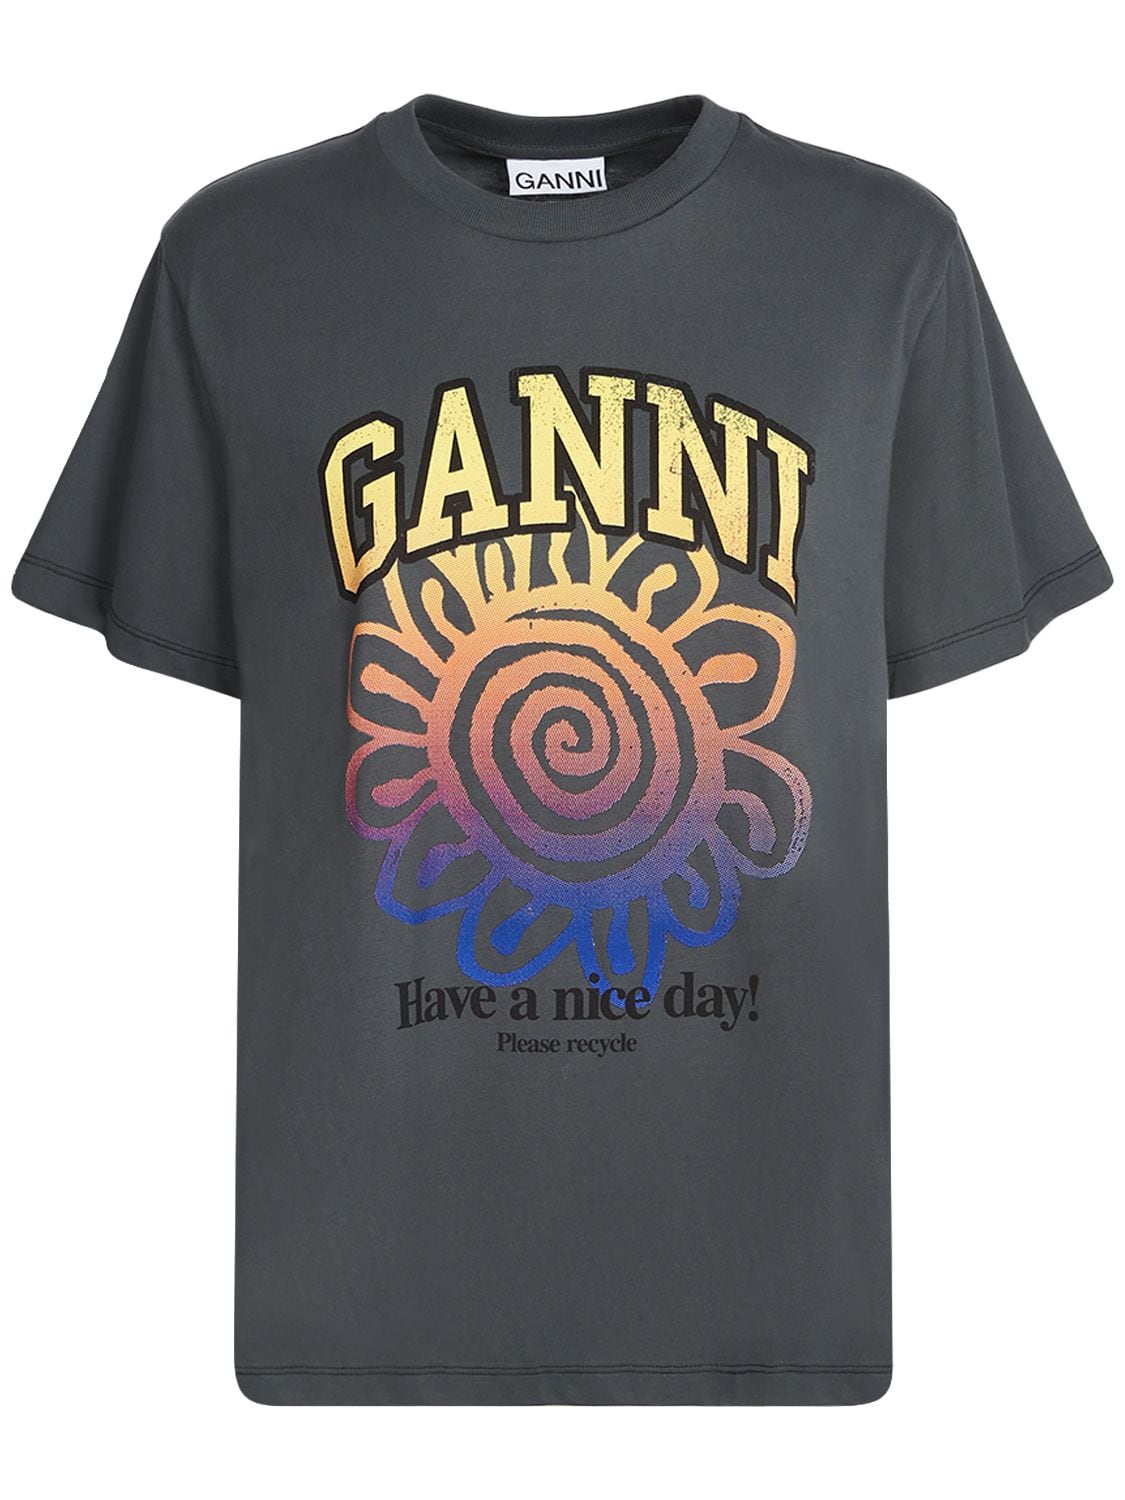 Ganni Short Sleeve Relaxed Yellow Flower T-Shirt in White | Women's Size 4XL | Cotton/Organic Cotton